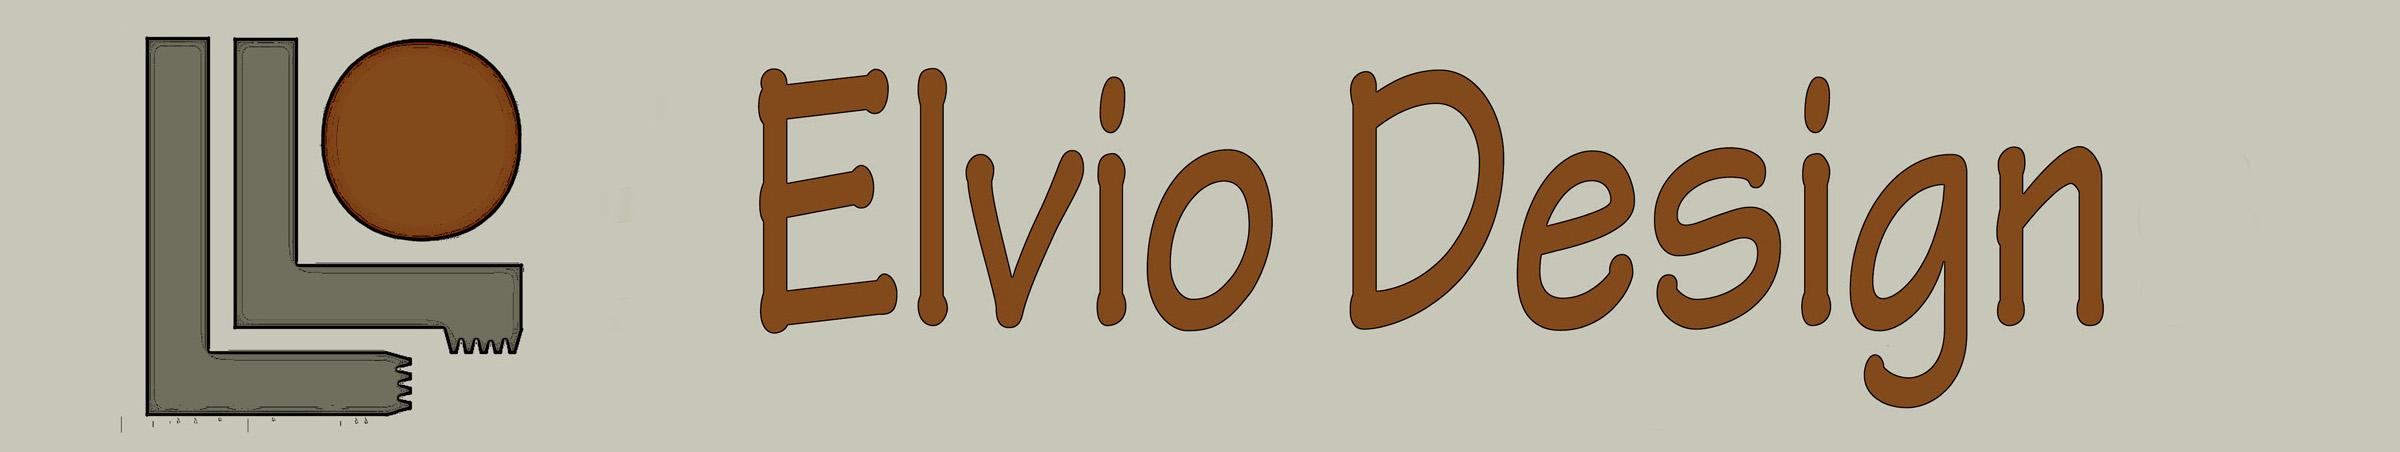 Elvio Design